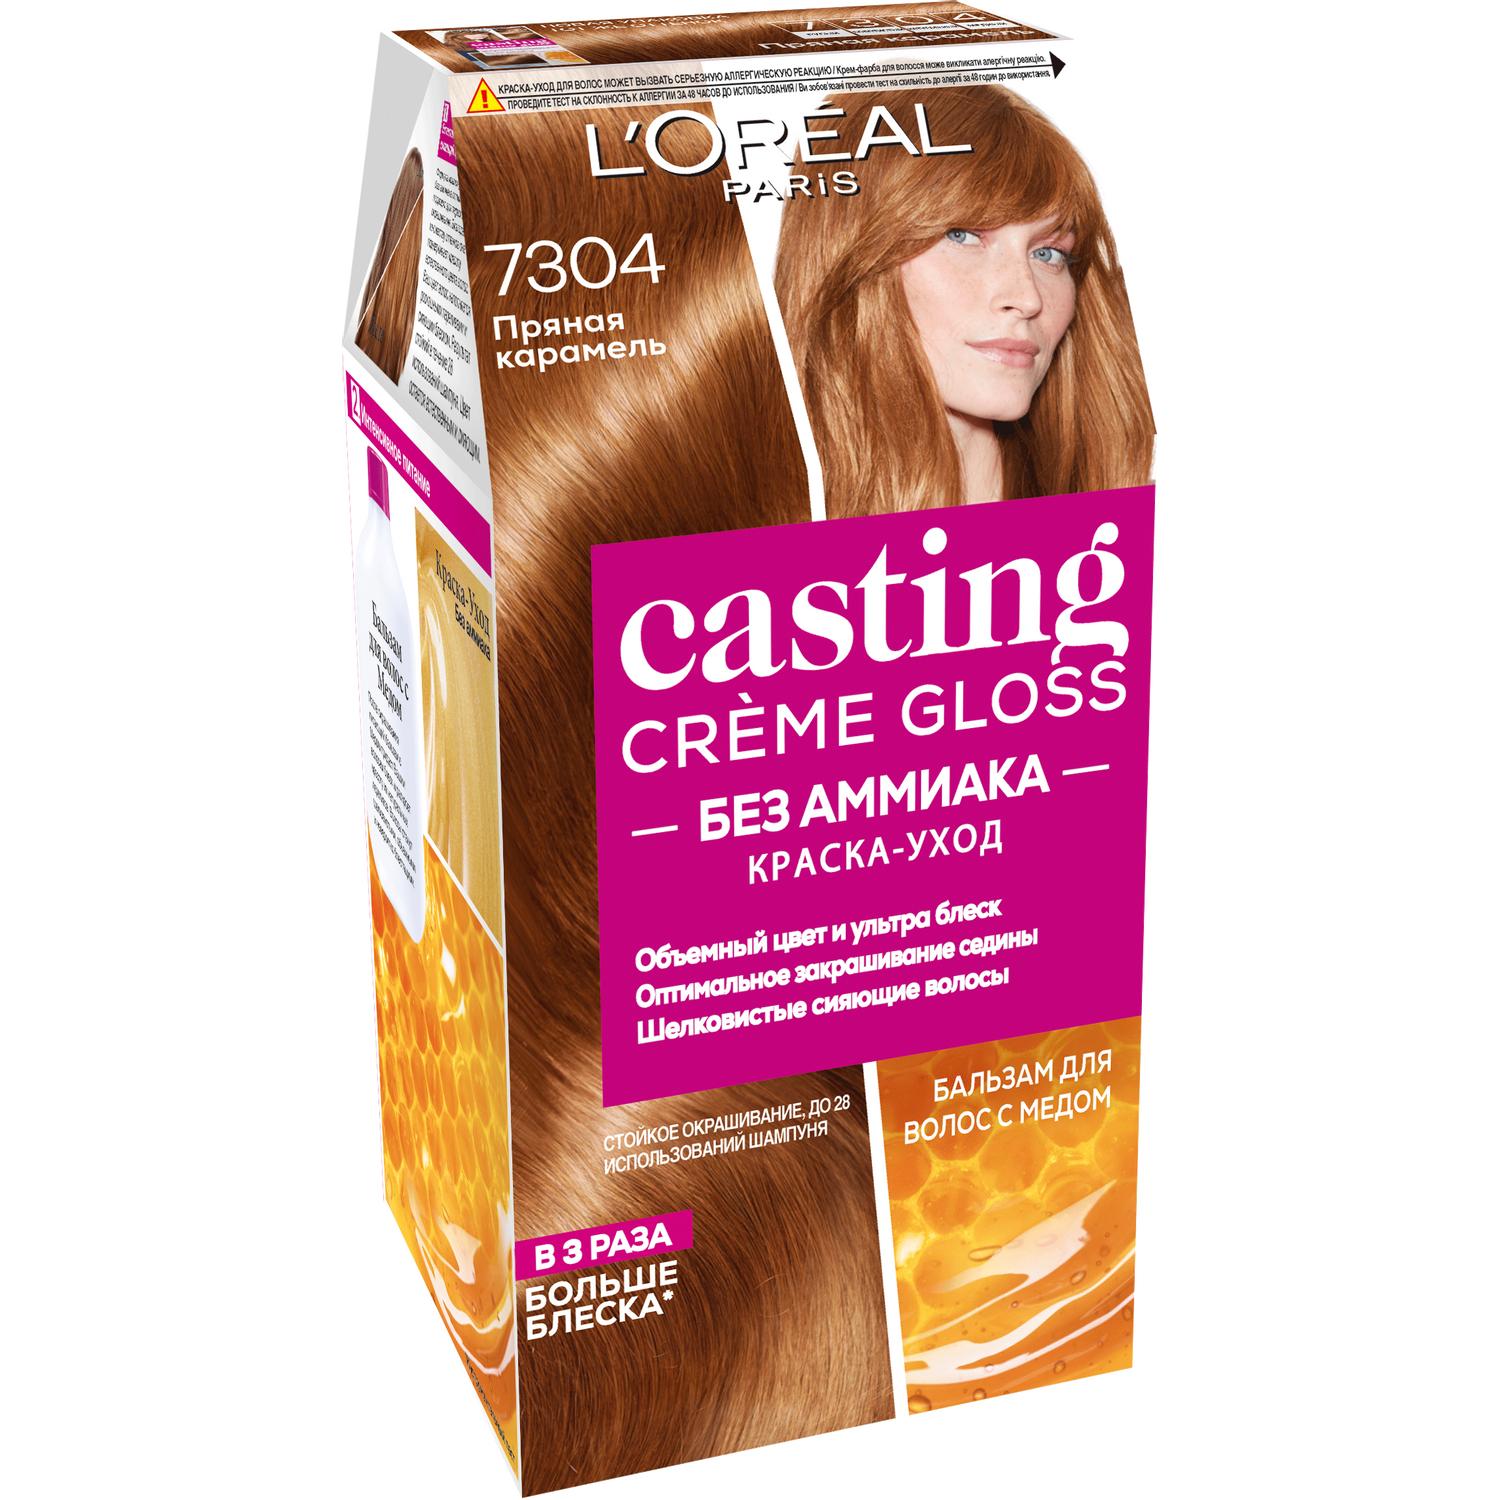 Краска L’Oreal Casting Creme Gloss 7304 254 мл Пряная карамель (A8005227) краска для волос l oreal casting natural gloss 623 карамель маккиато